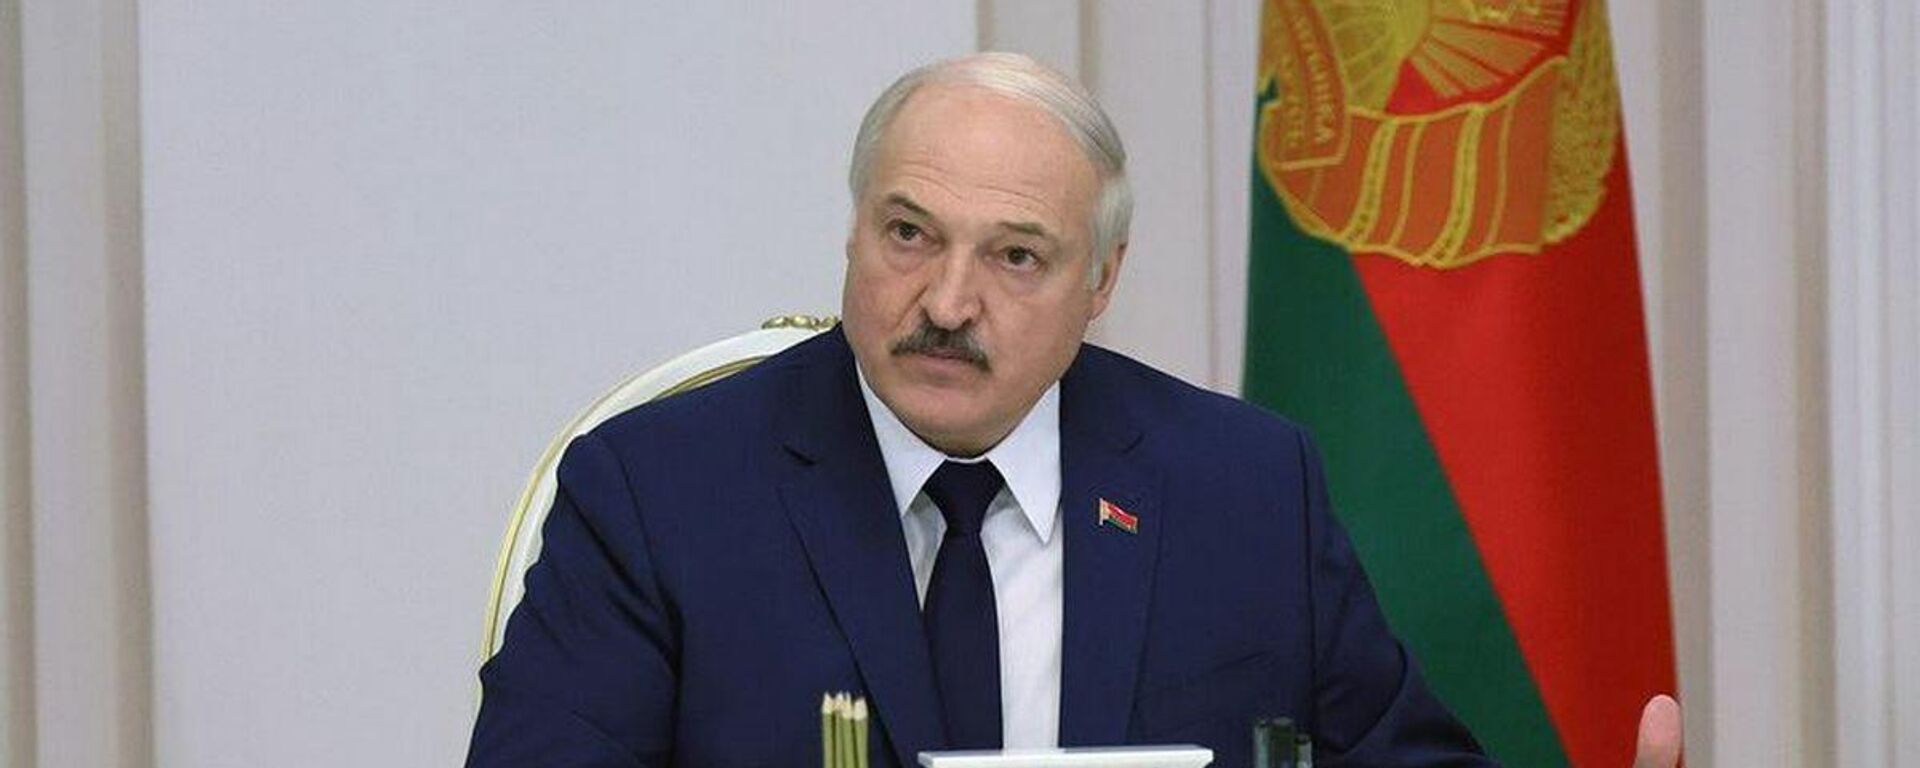 Президент Беларуси Александр Лукашенко  - Sputnik Беларусь, 1920, 19.11.2021